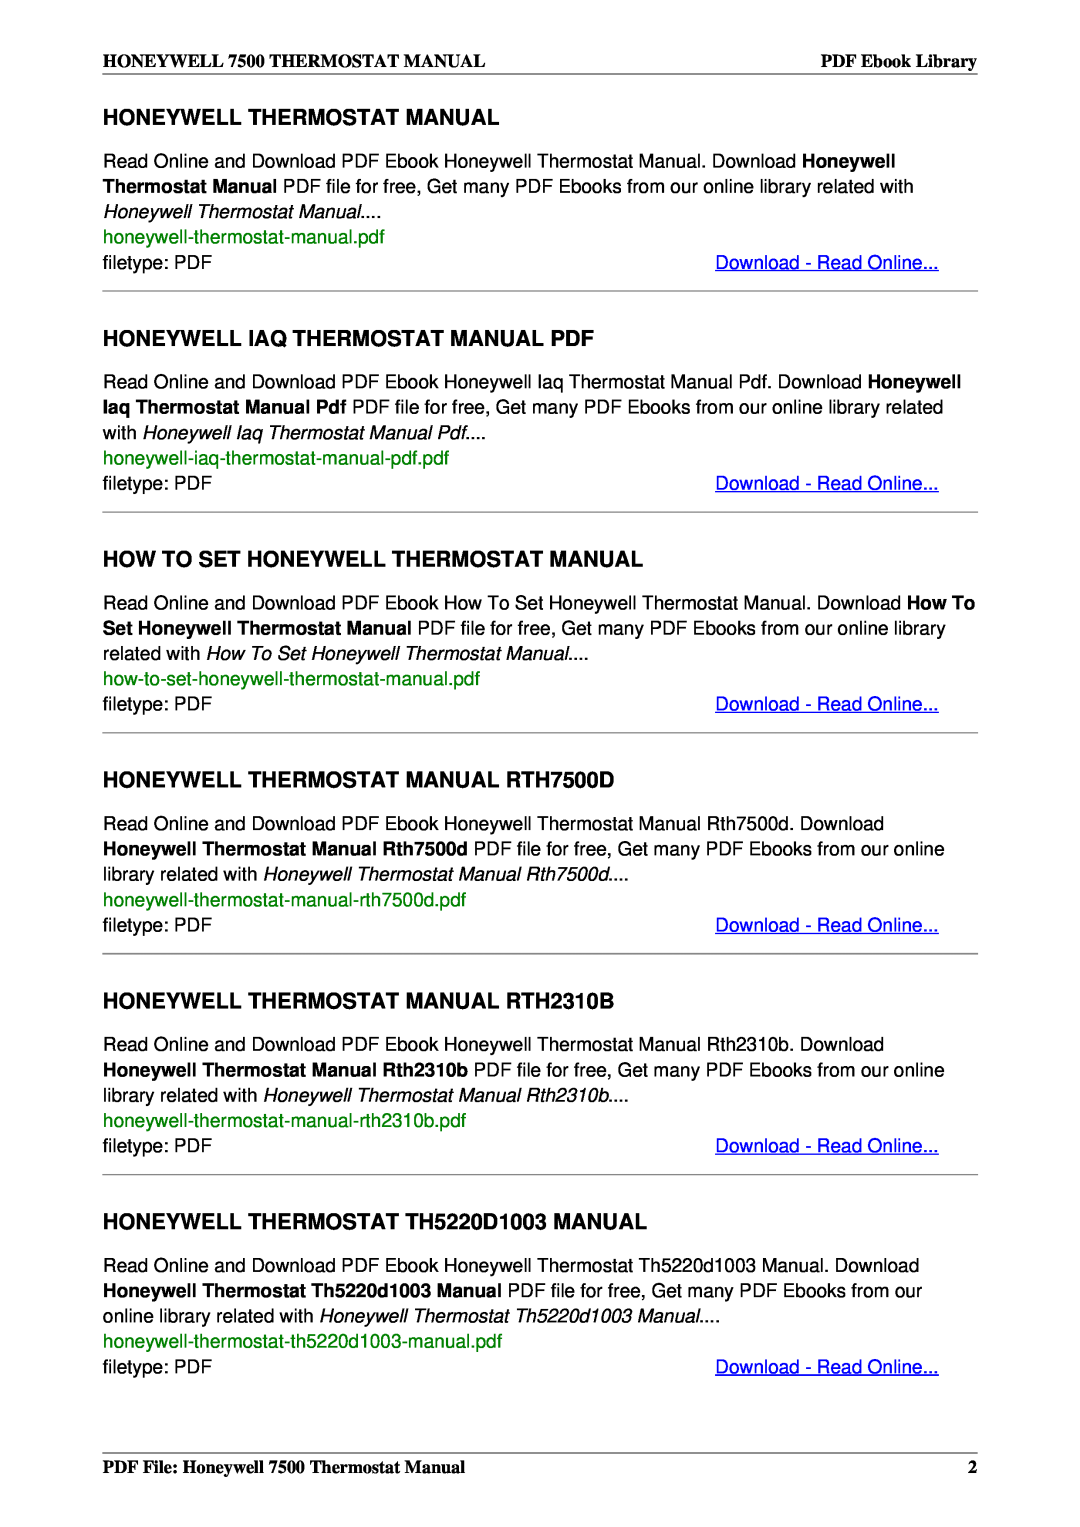 Honeywell 7500 manual Honeywell Iaq Thermostat Manual Pdf, How To Set Honeywell Thermostat Manual, filetype PDF 